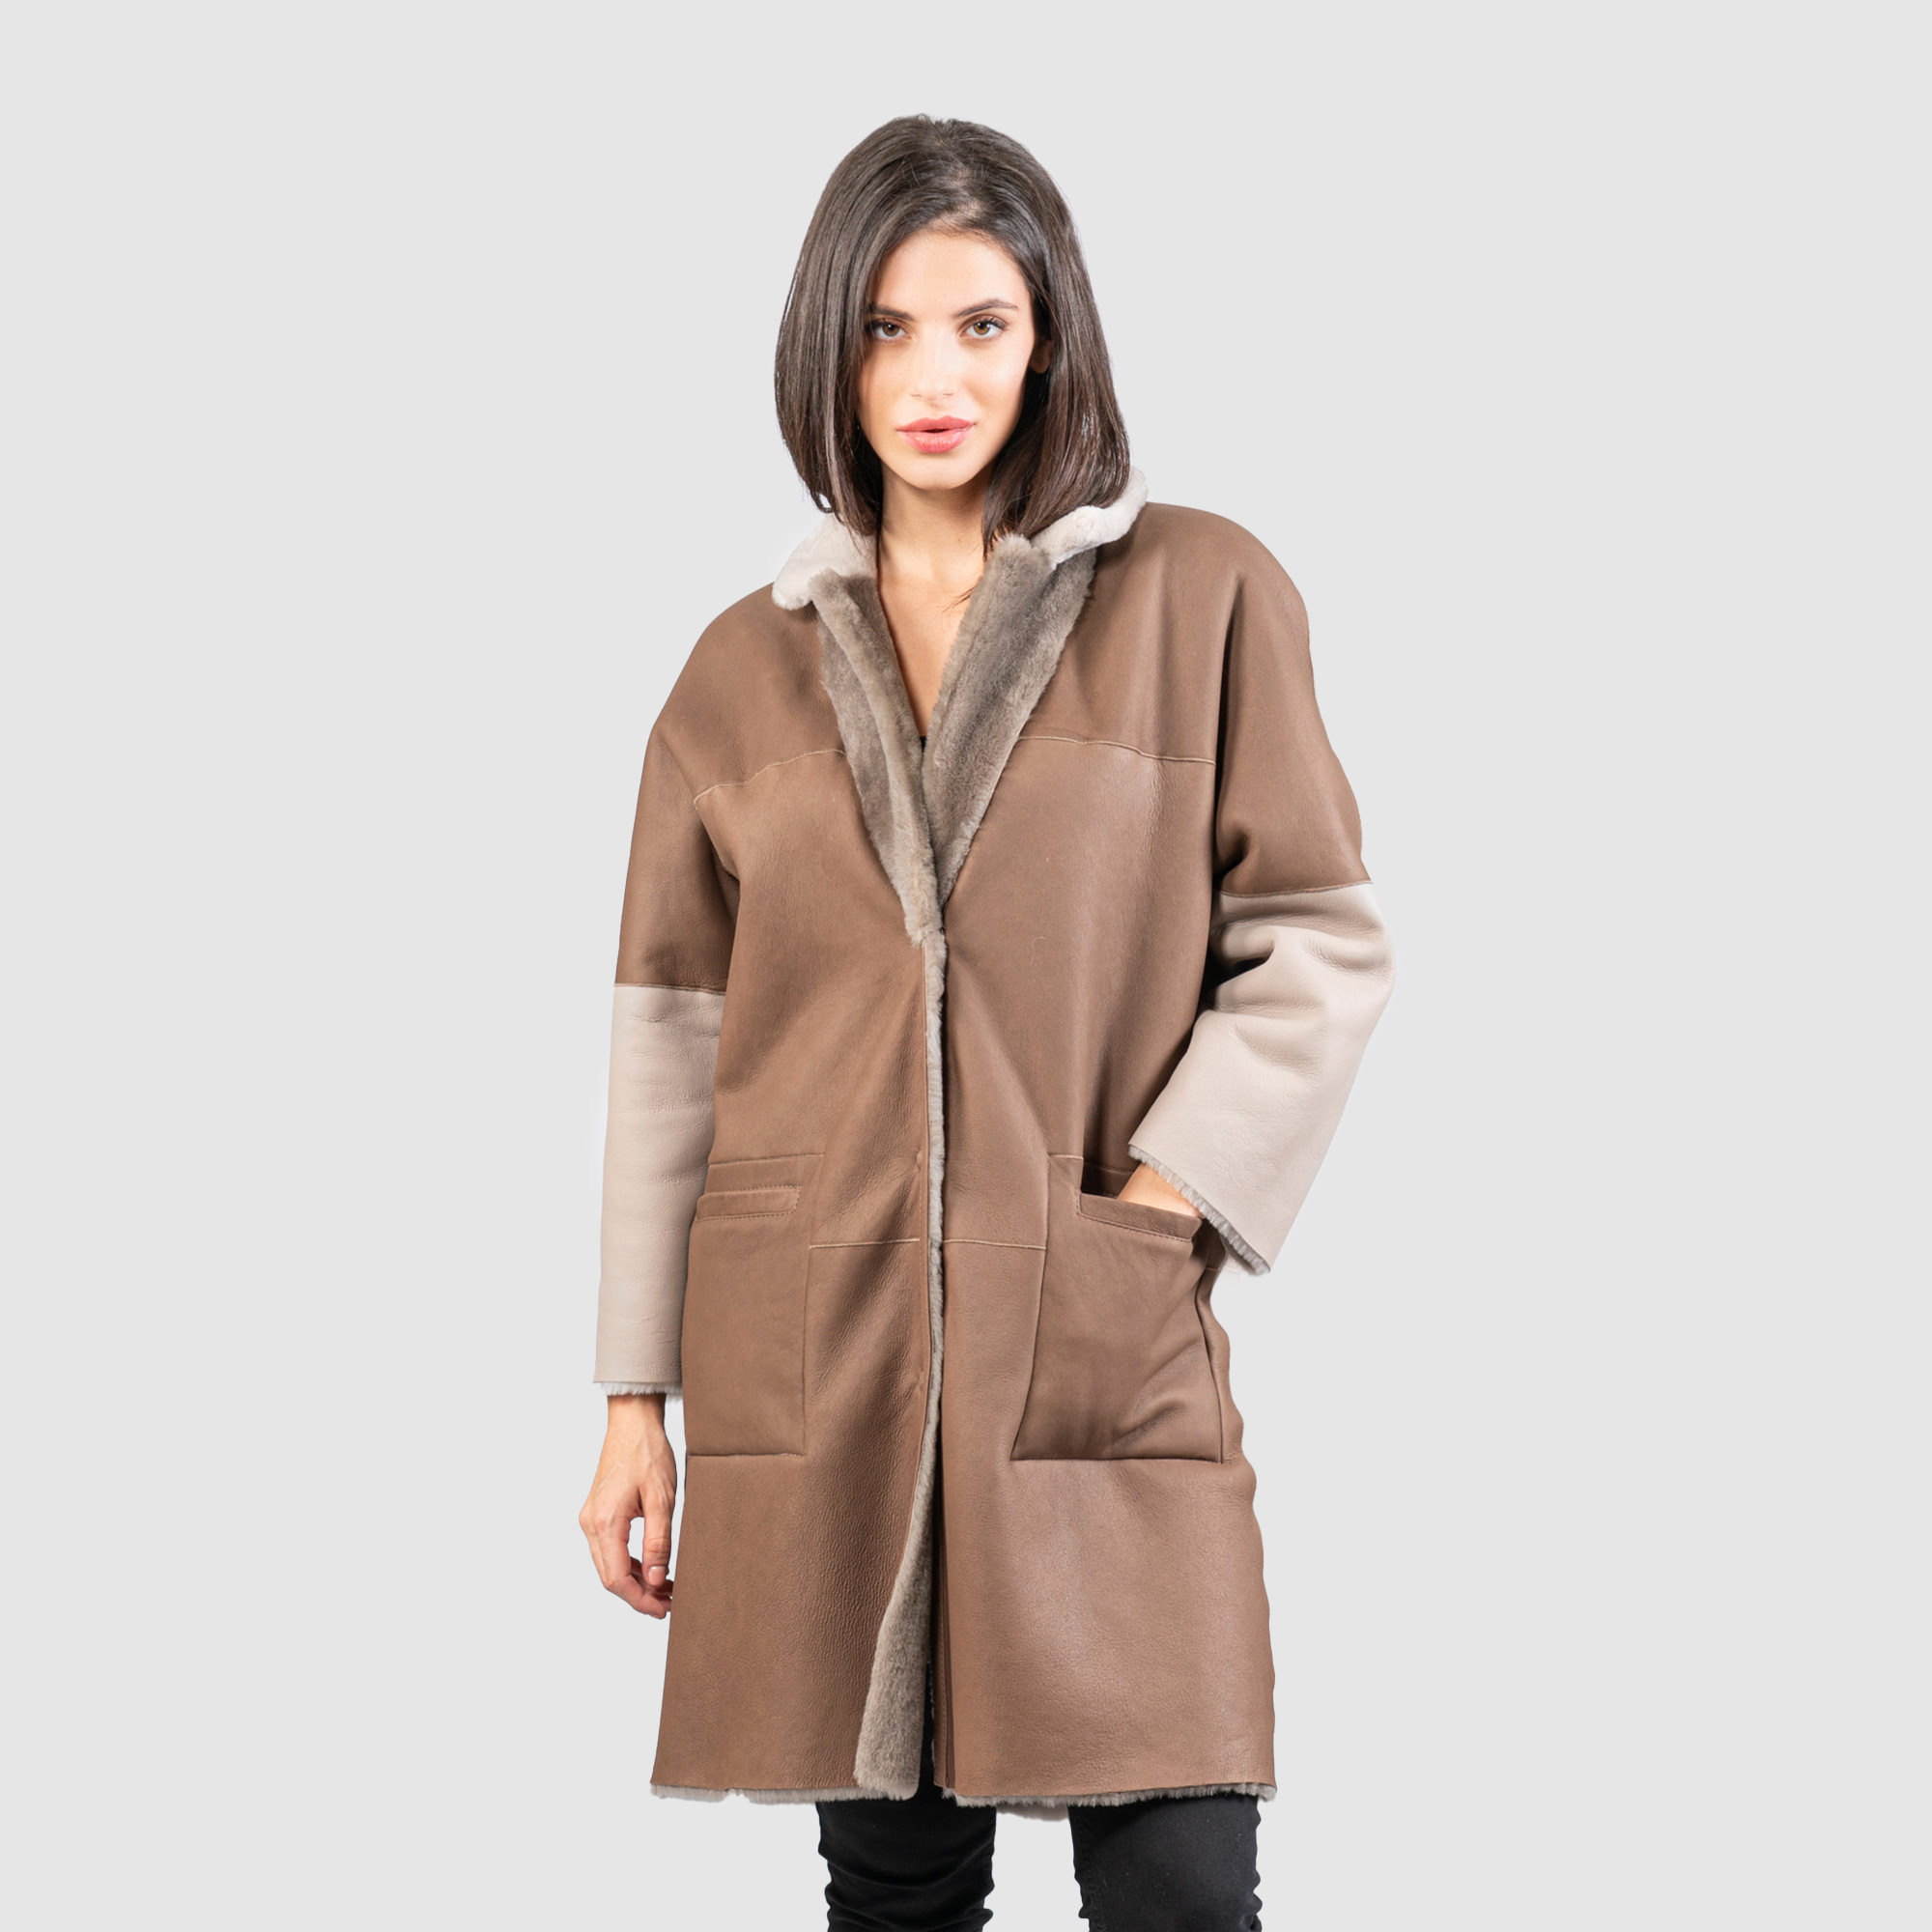 Reversible sheepskin jacket in brown shades